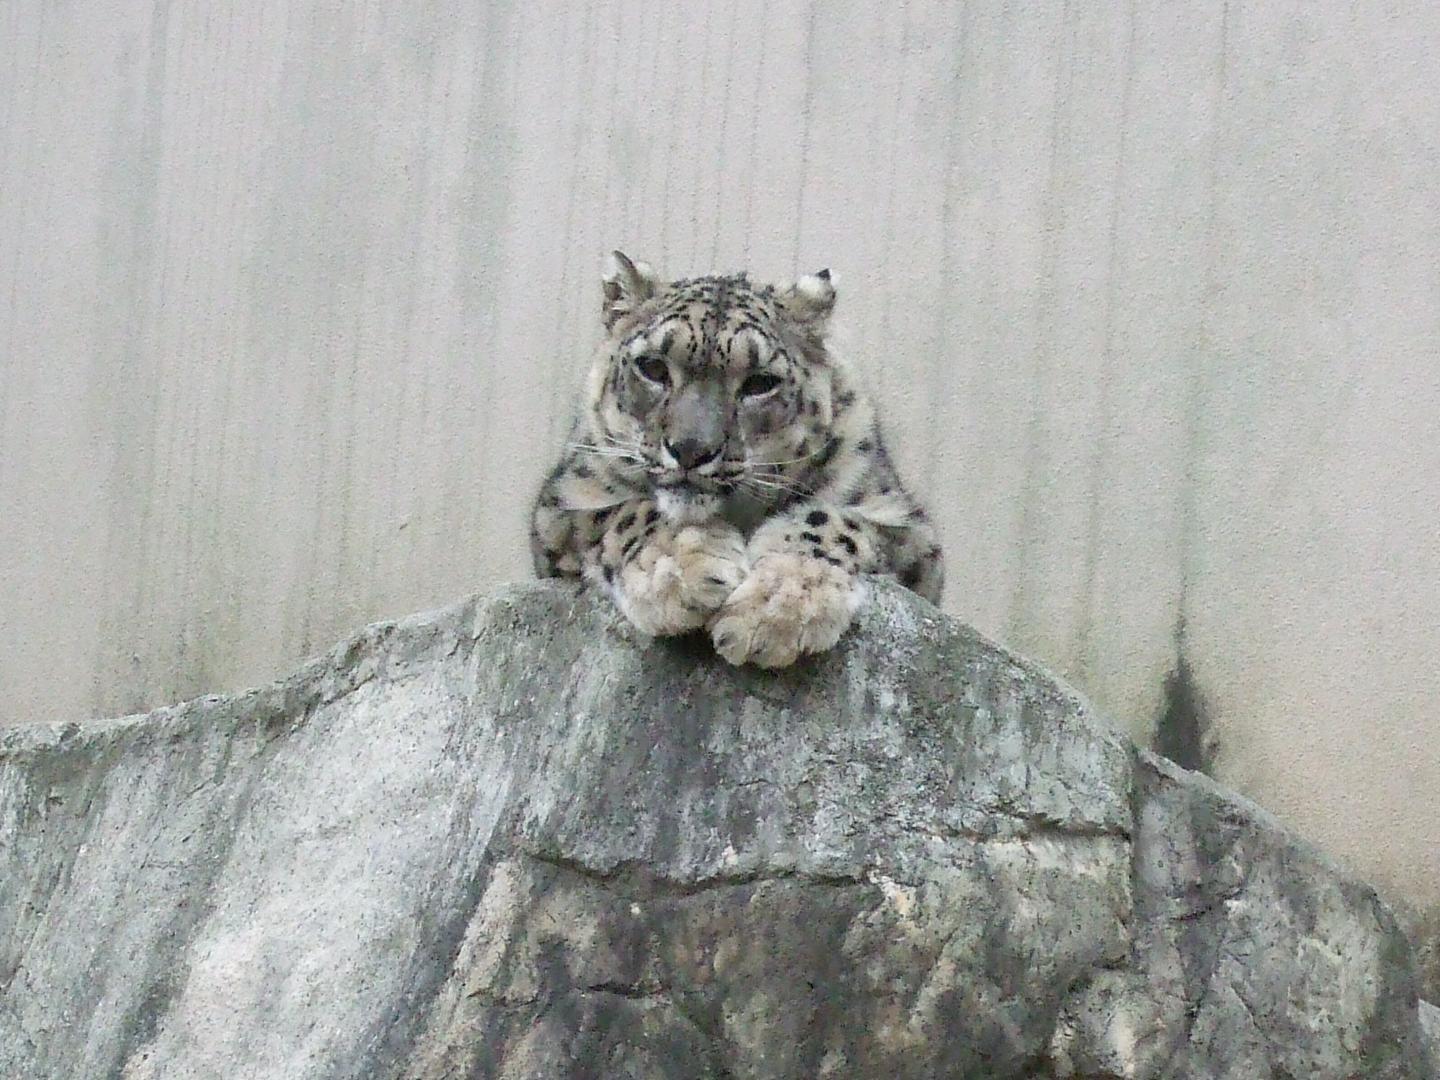 Snow leopard at Kobe Oji Zoo. Credit Kodzue Kinoshita